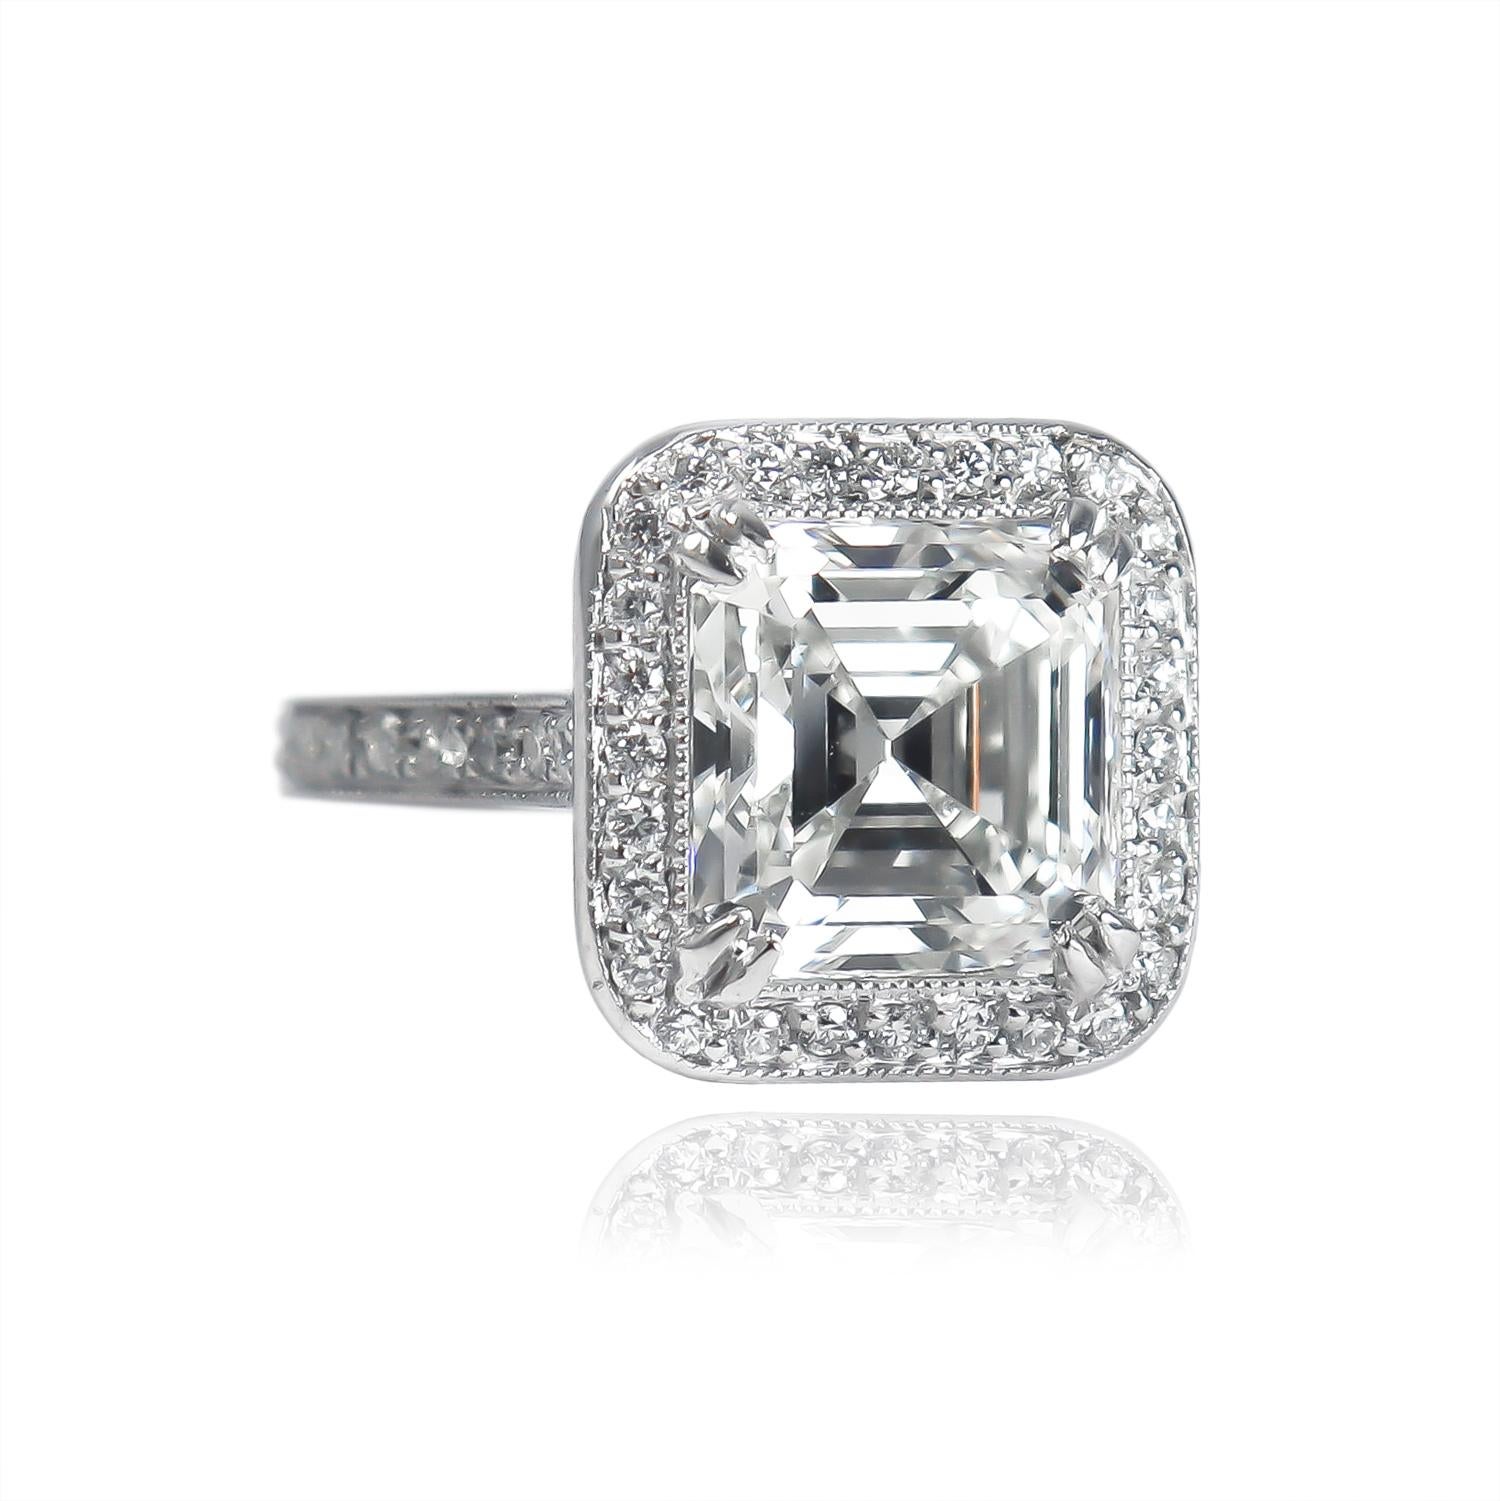 Contemporary J. Birnbach GIA Certified 5.20 Carat H VS2 Asscher Cut Diamond Pavé Ring